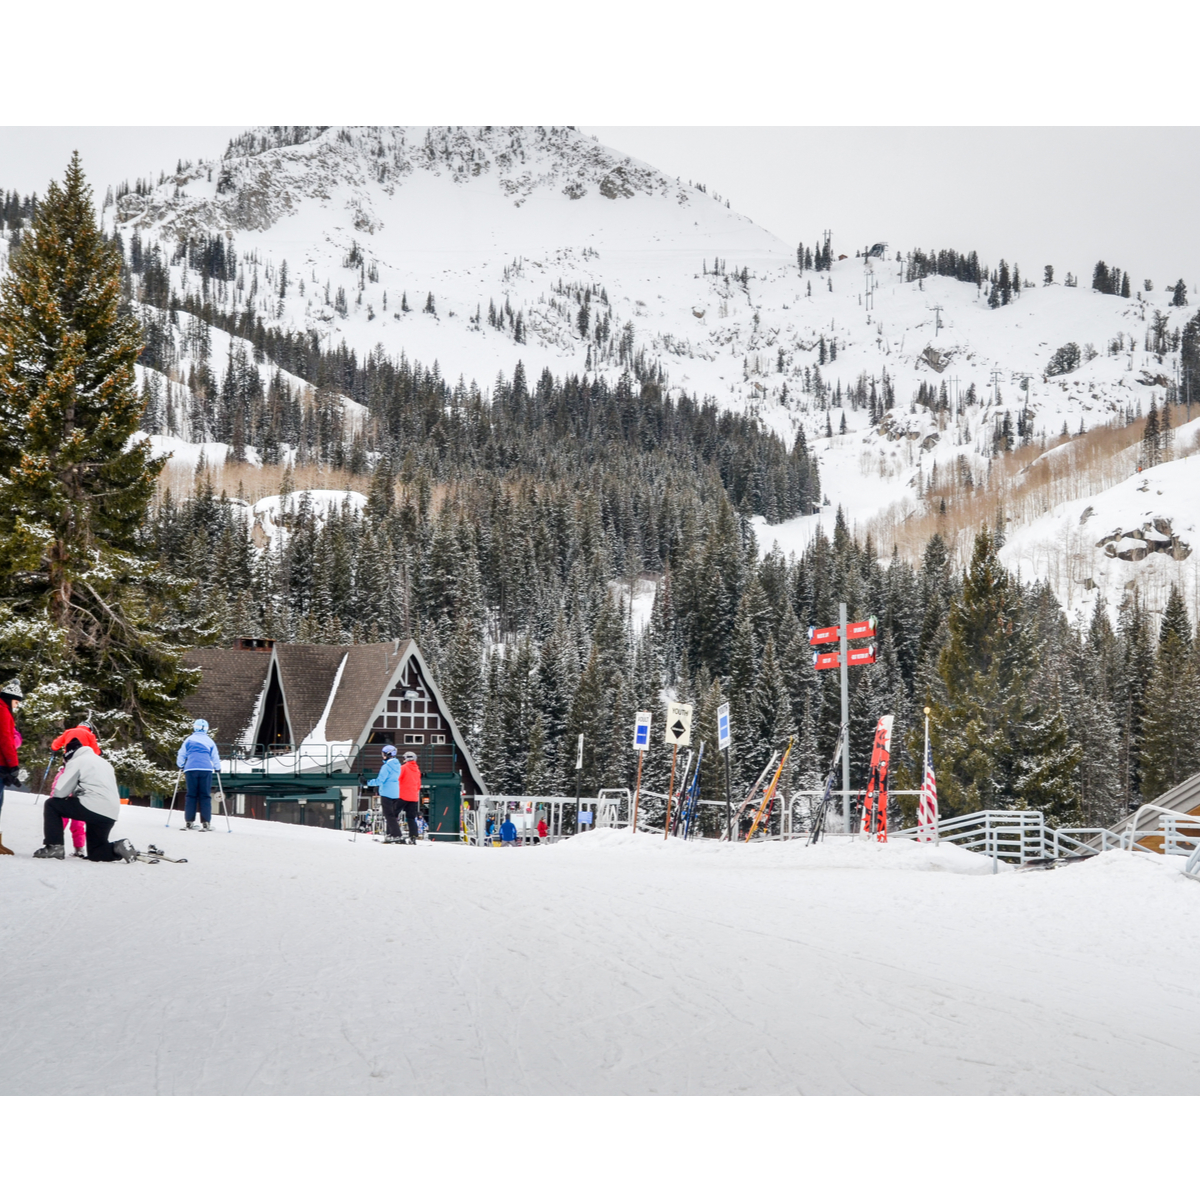 Mejores centros de esquí de Utah para cada nivel de habilidad e interés - 13